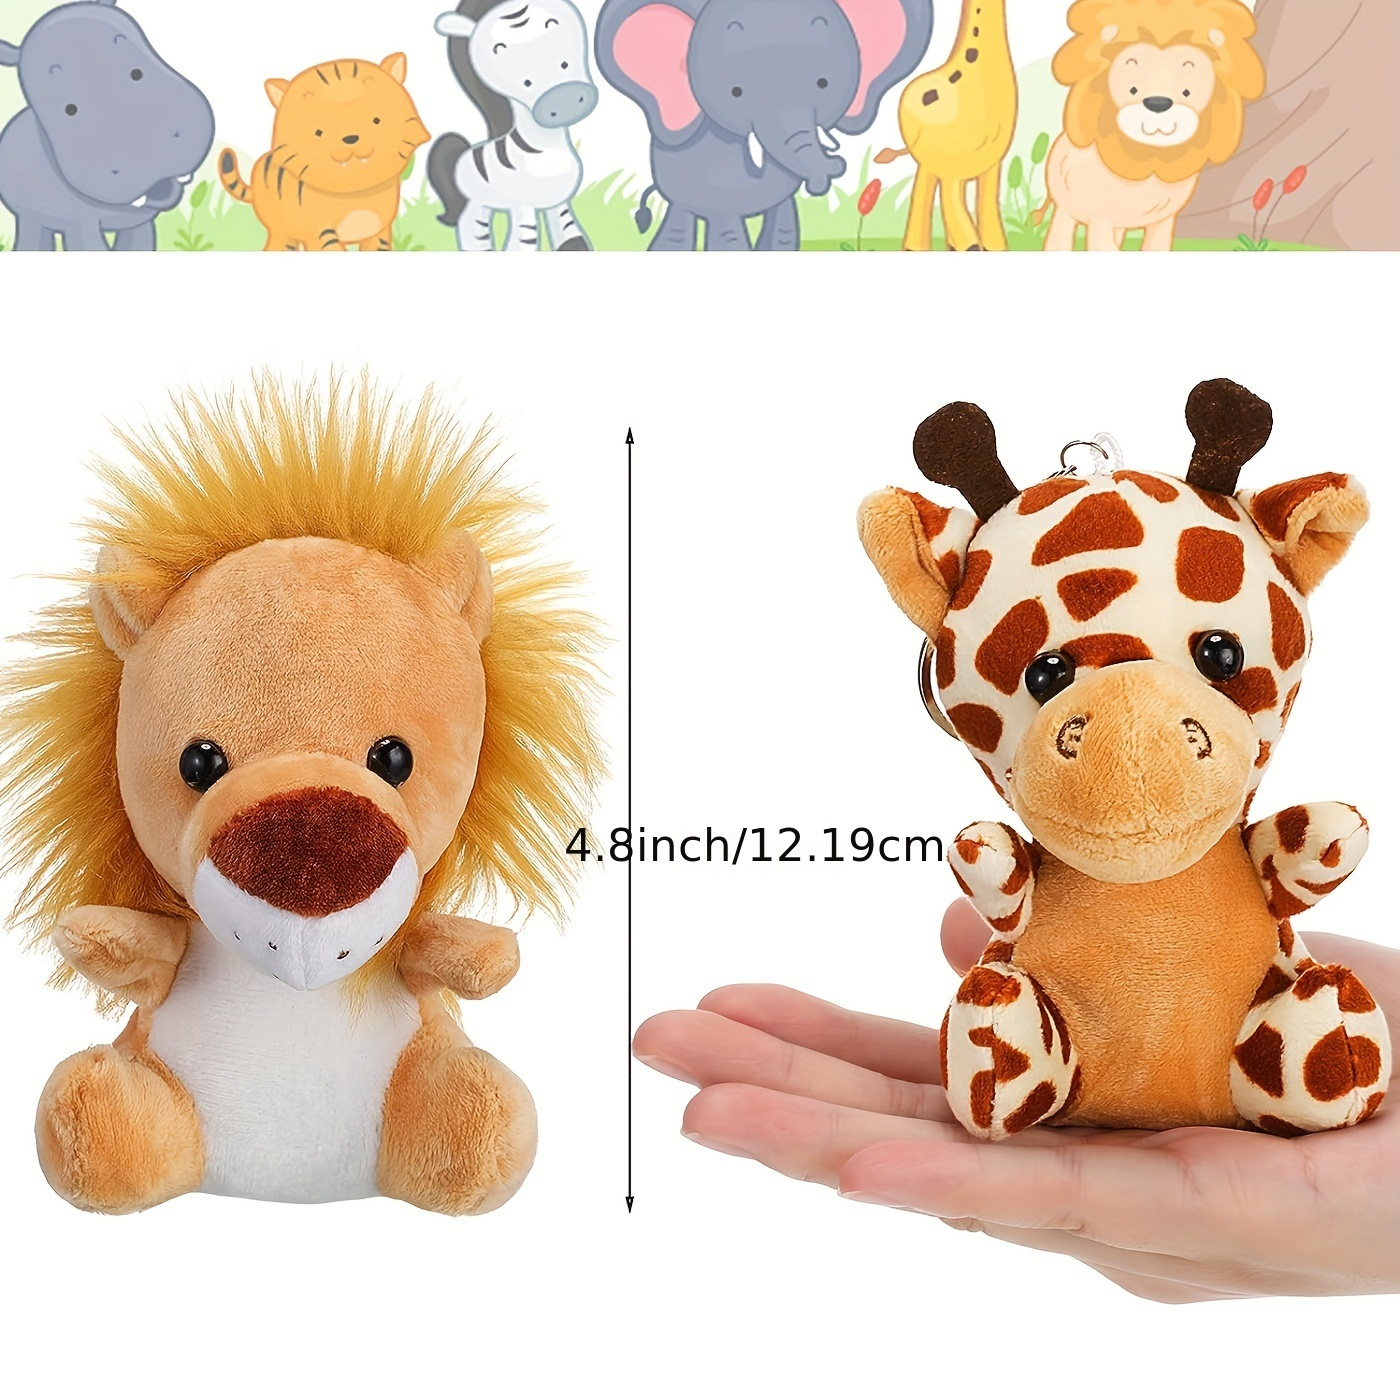  Small Stuffed Animals Bulk, Cute Stuffed Animal Keychains Bulk,  Safari Stuffed Animals Plush Toy Elephant Giraffe : Toys & Games